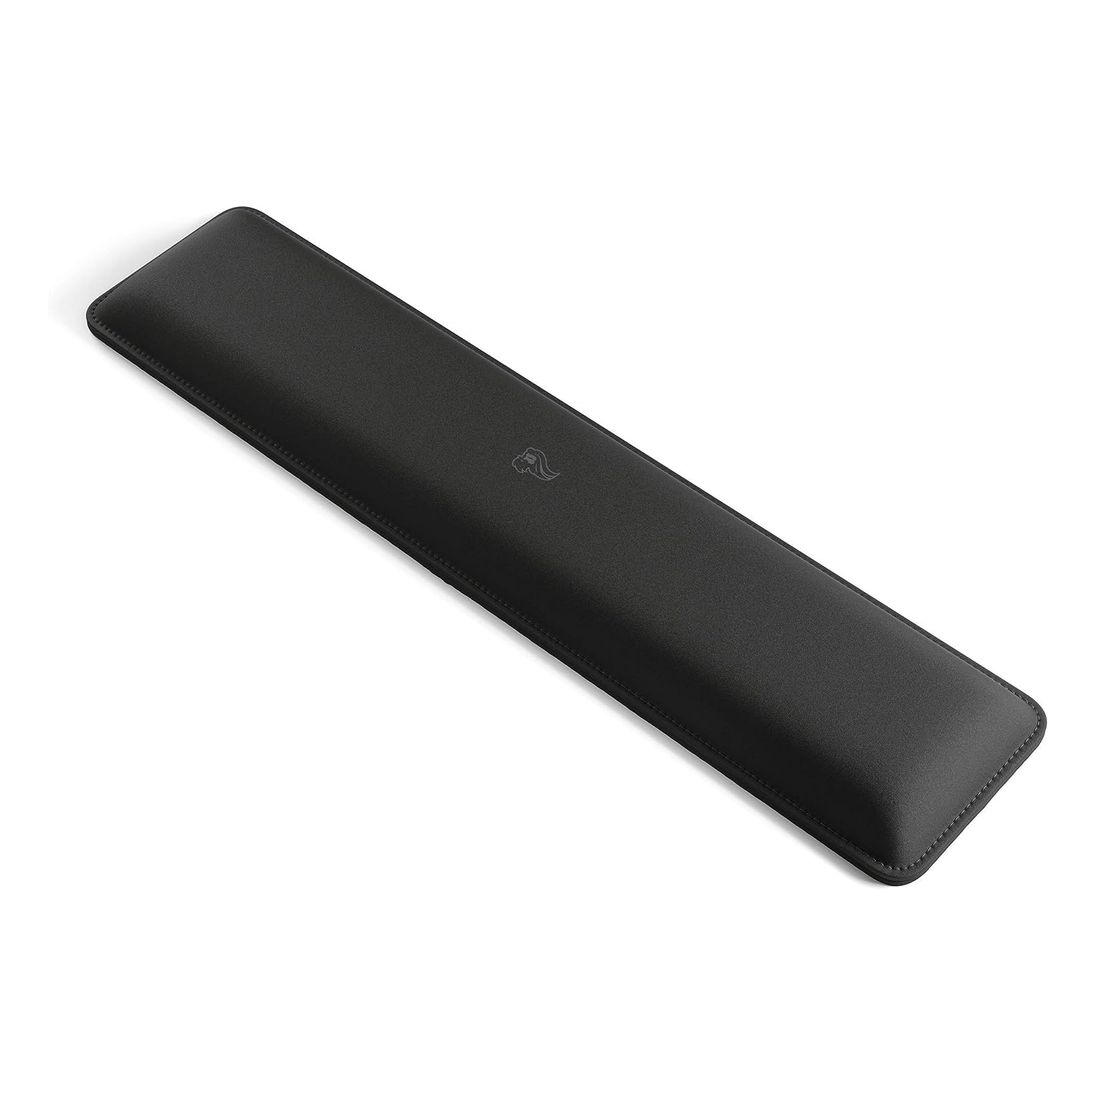 Glorious Gaming Keyboard Slim Wrist Pad Full Size - Black (43 x 10 x 2.5 cm)